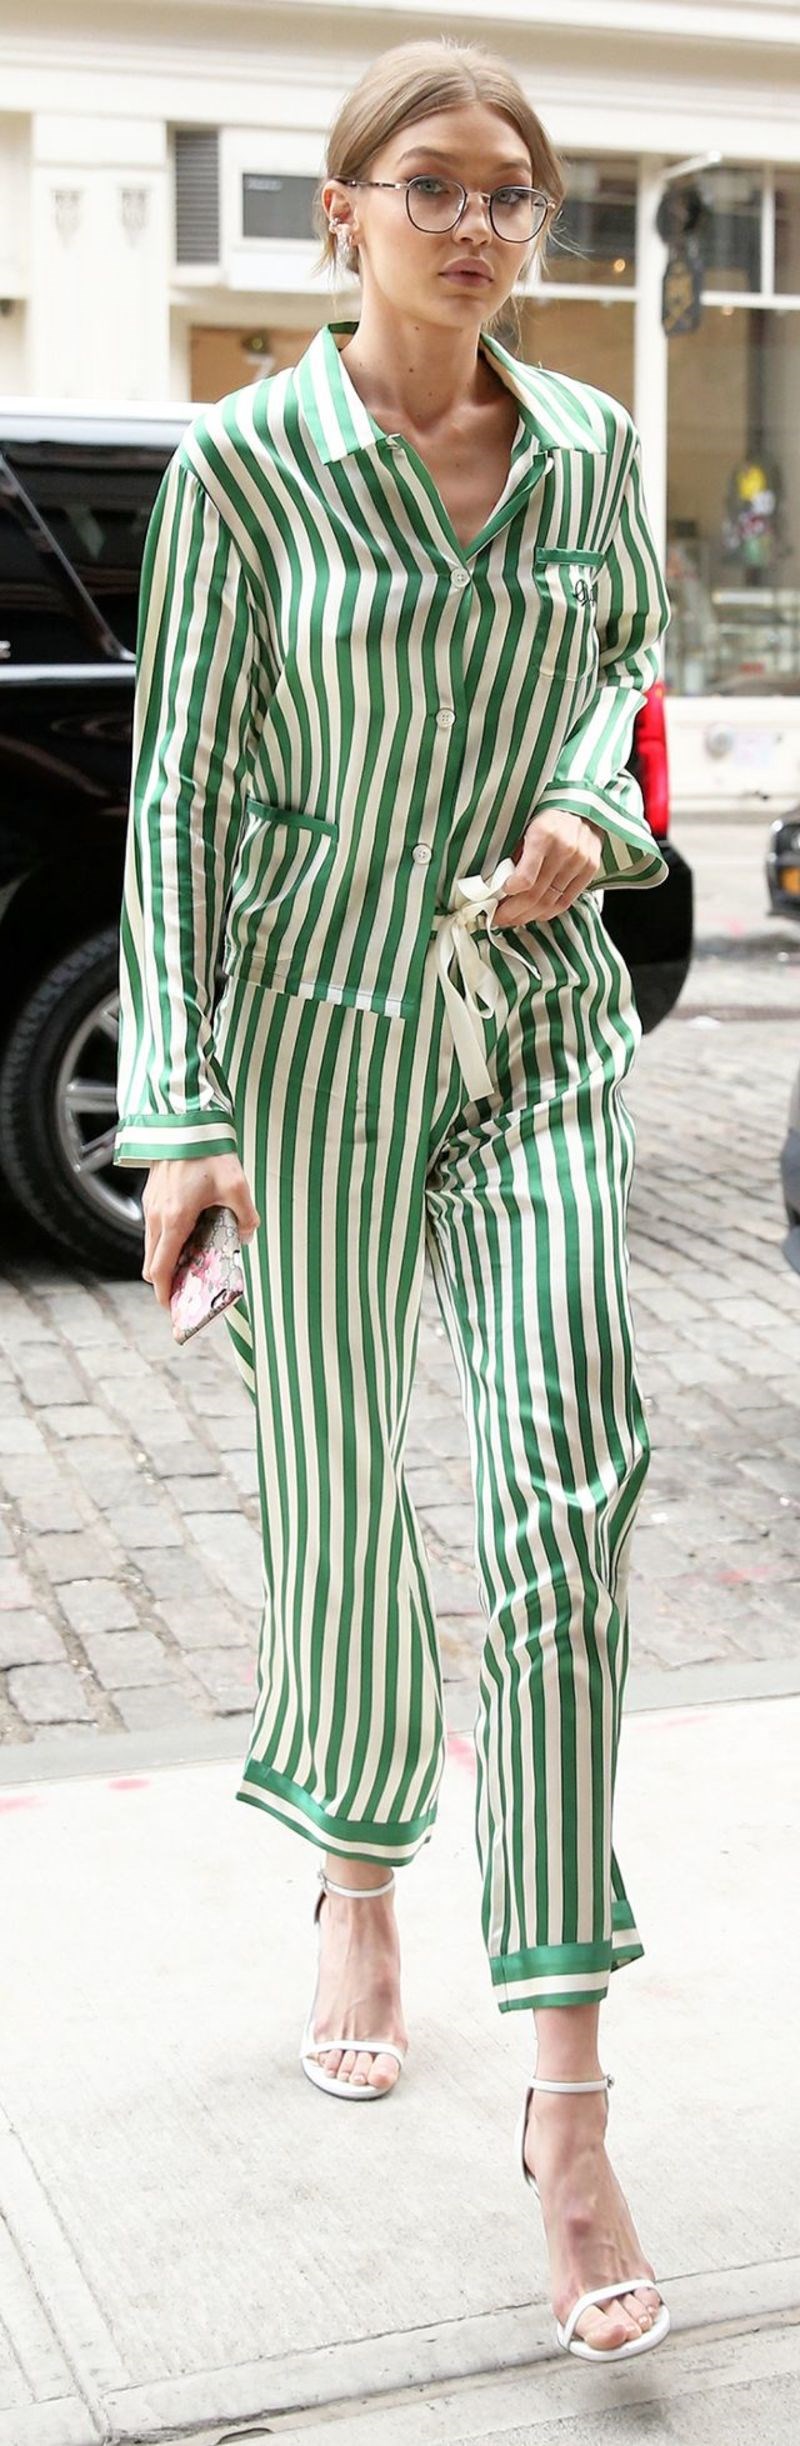 H Gigi Hadid βγήκε στον δρόμο με το μόνο ρούχο που δεν μπορείς να φορέσεις στον δρόμο